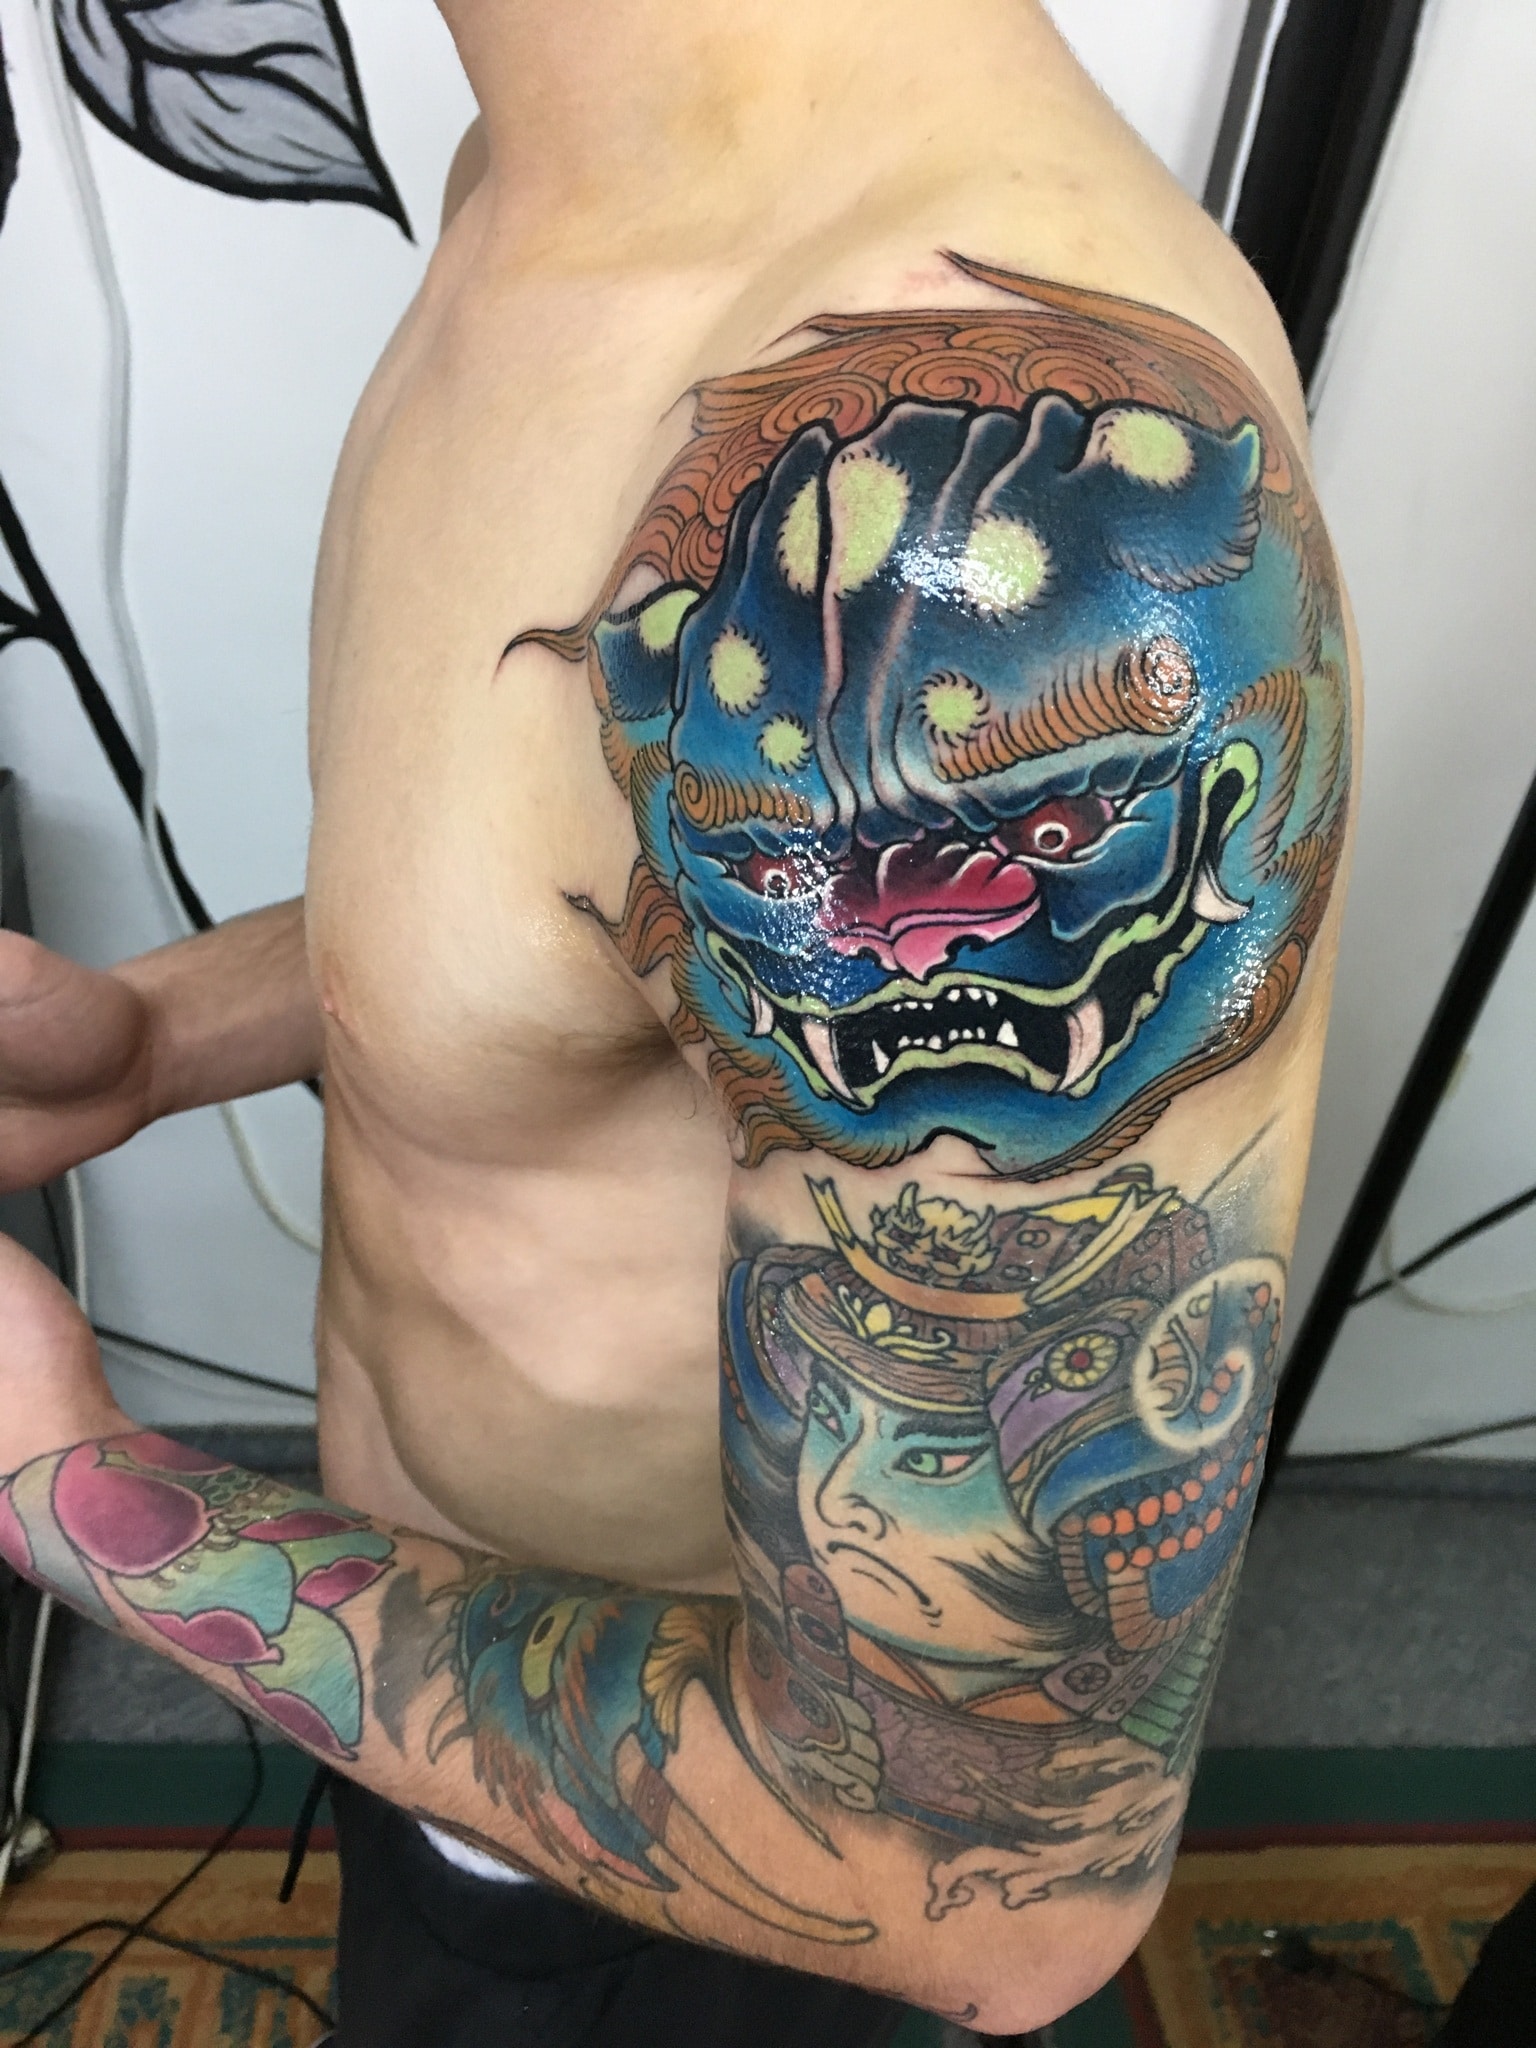 Joe Ankave Tattoo Artist Interview Image 6